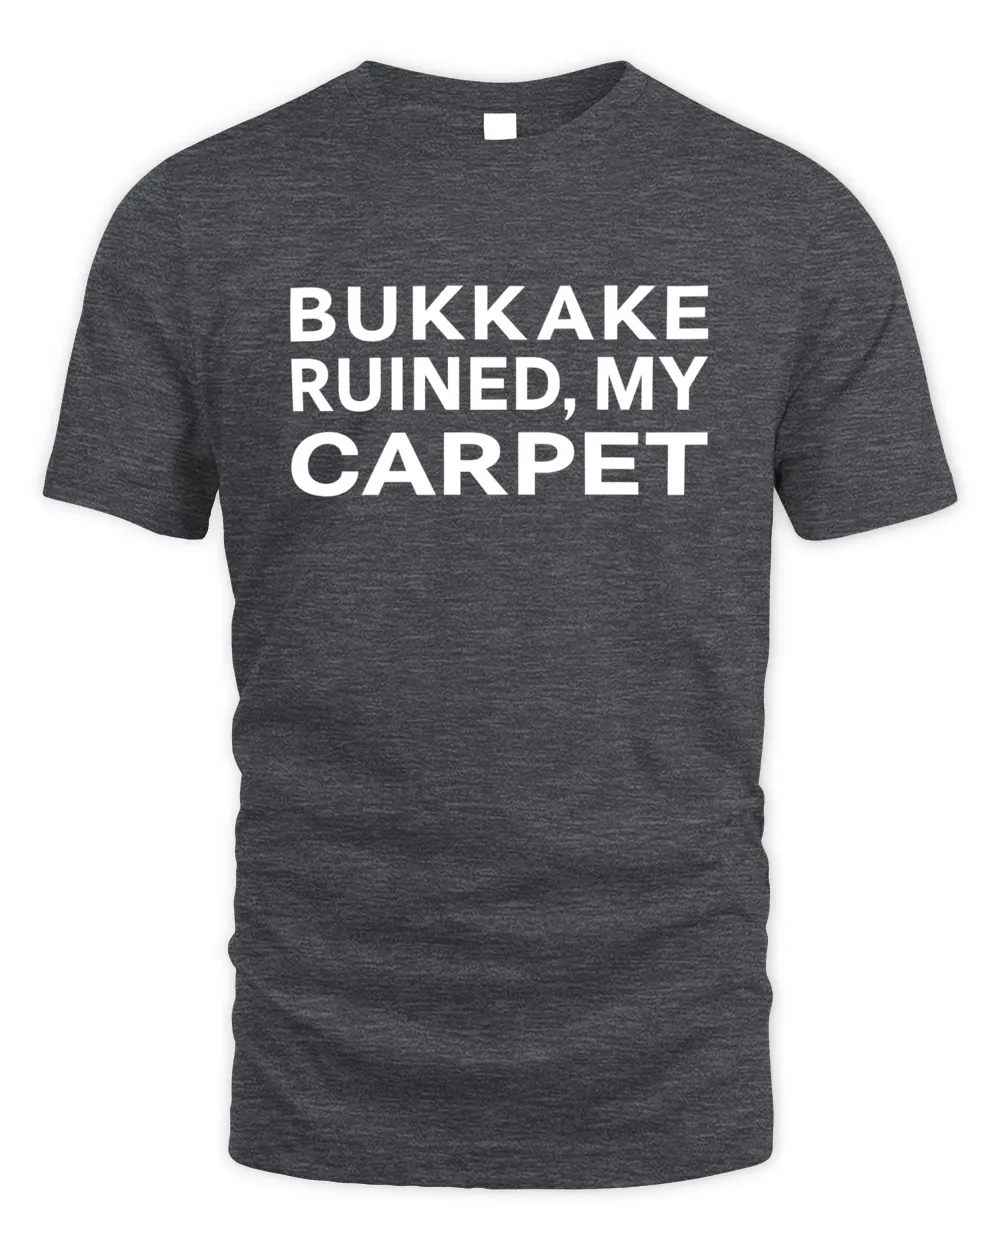 Bukkake Ruined My Carpet Shirt Shirts That Go Hard